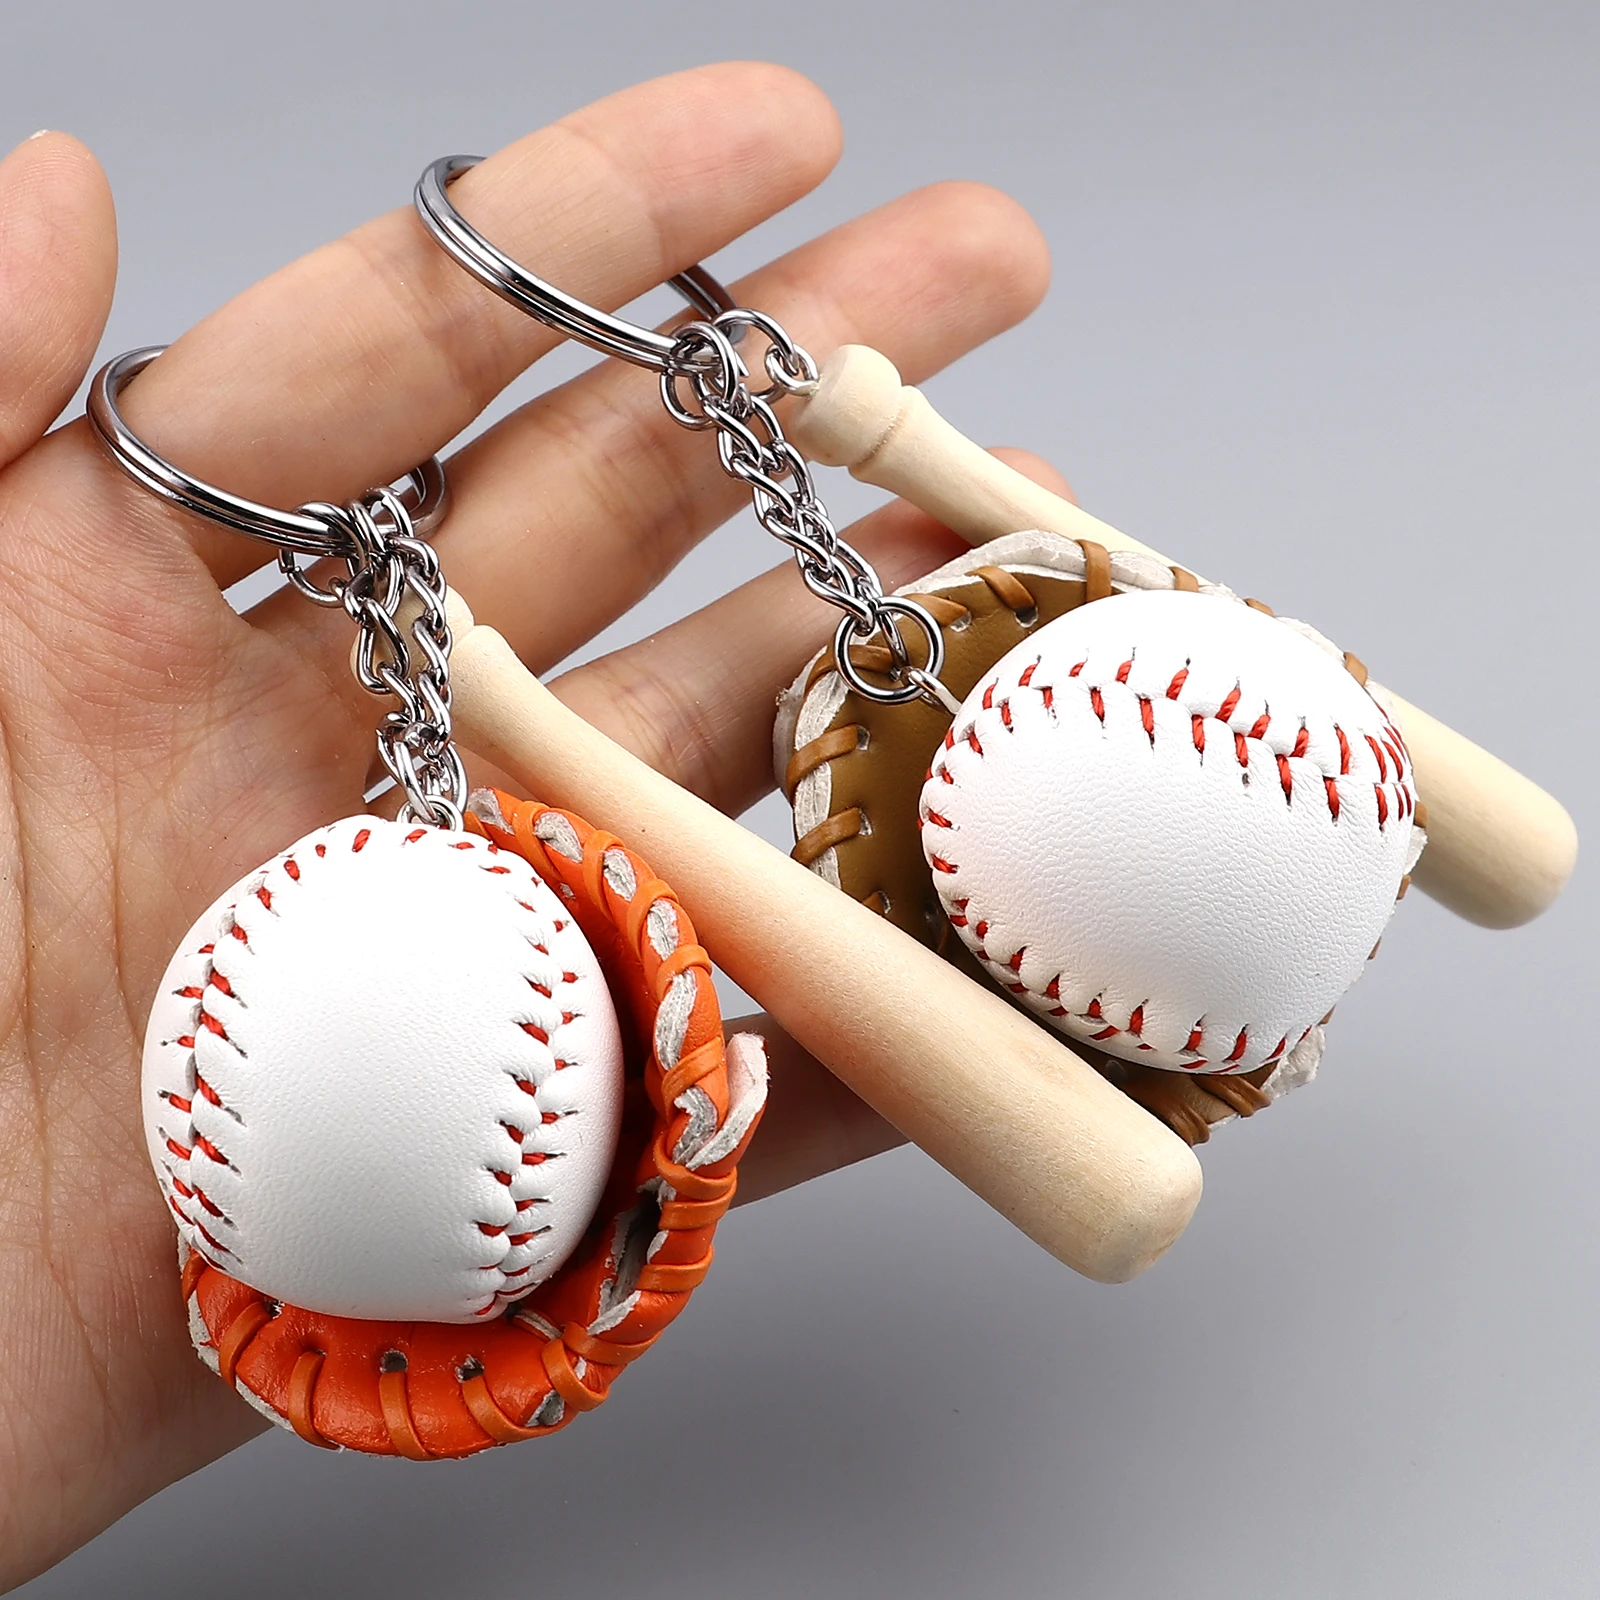 

Mini Three-piece Baseball Glove Wooden Bat Keychain Sports Car Key Chain Key Ring Gift For Man Women Men Gift 11cm, 1 Piece